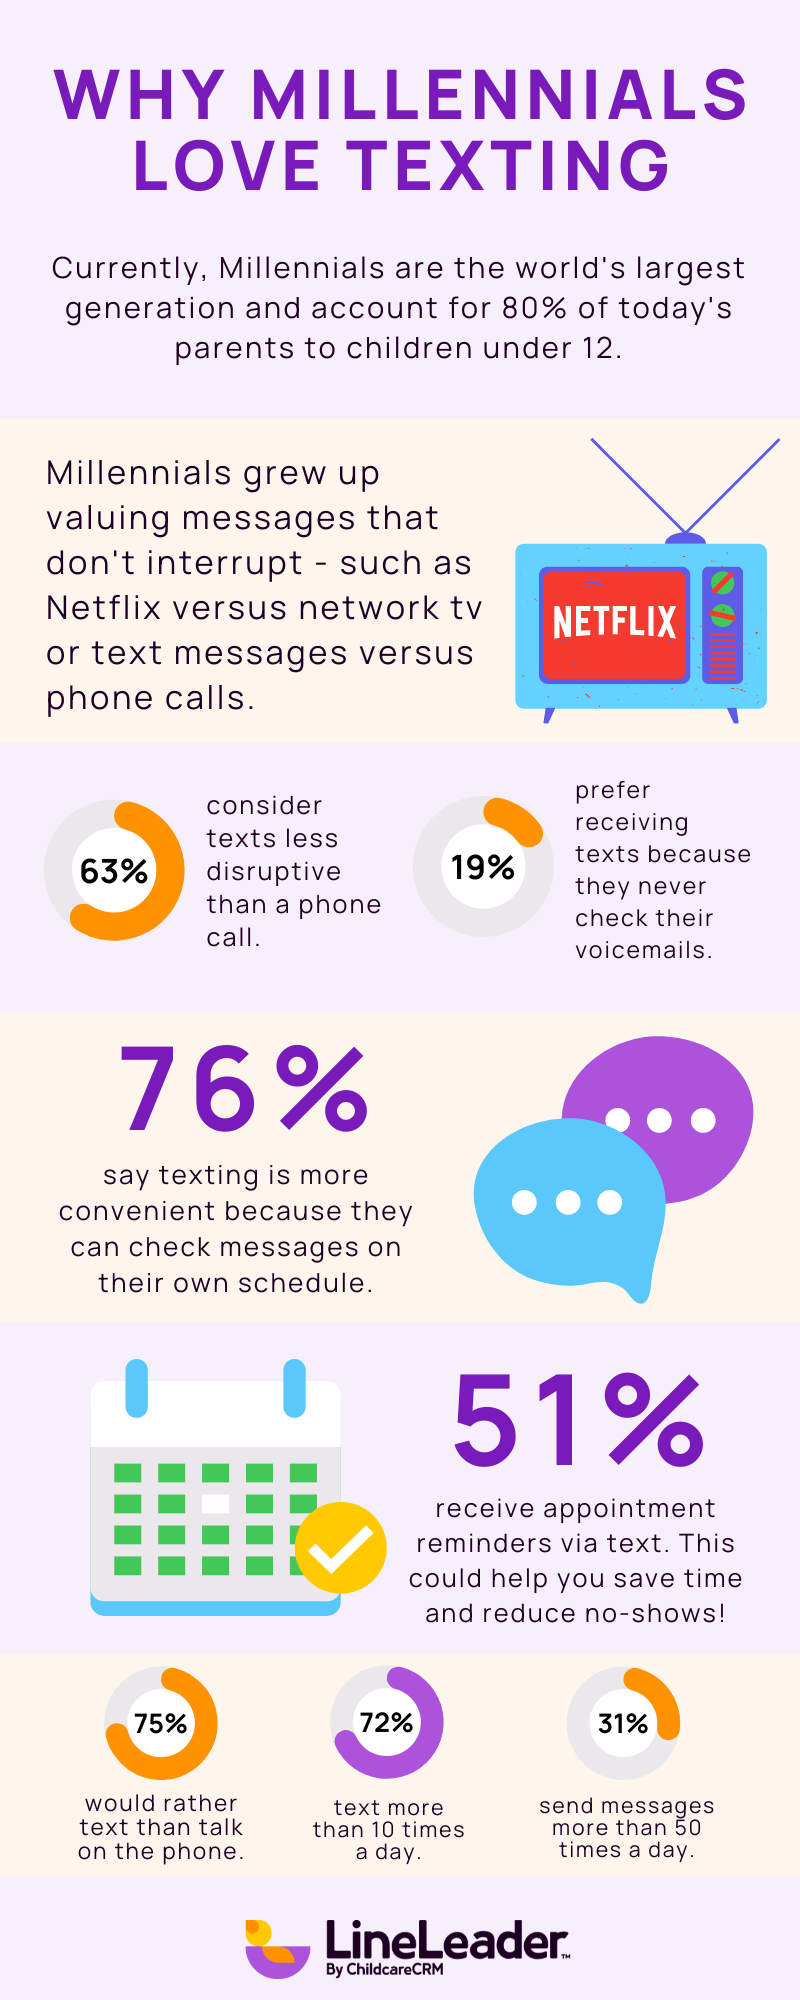 LineLeader Millennial Texting Infographic